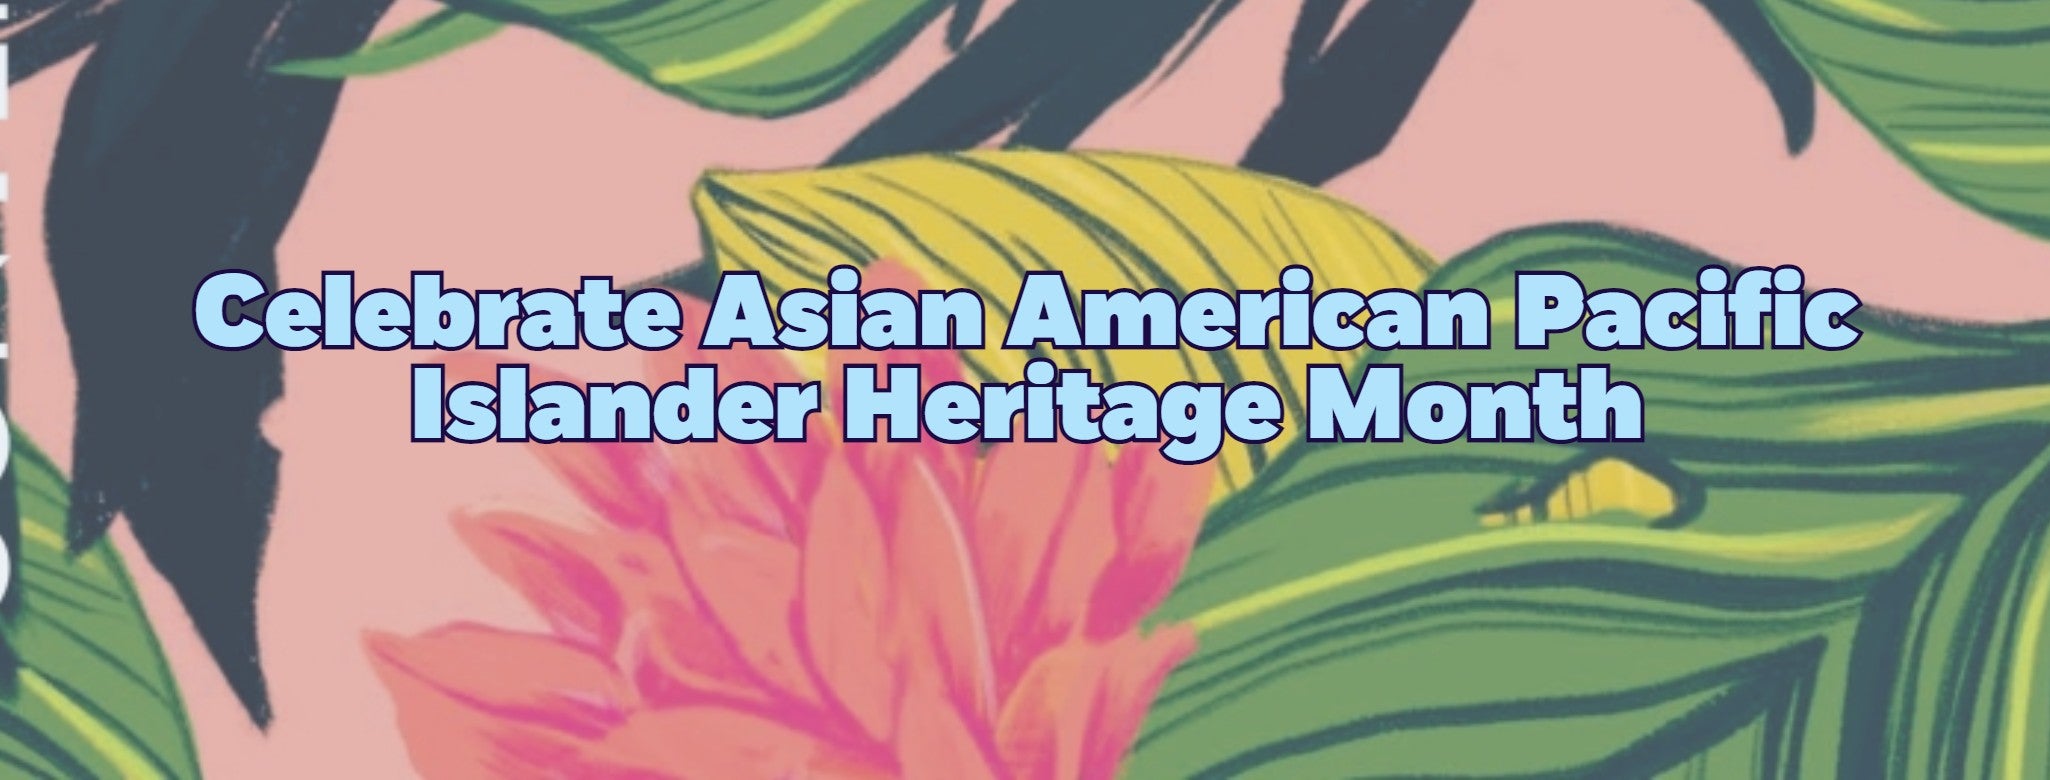 Celebrate Asian American Pacific Islander Month!